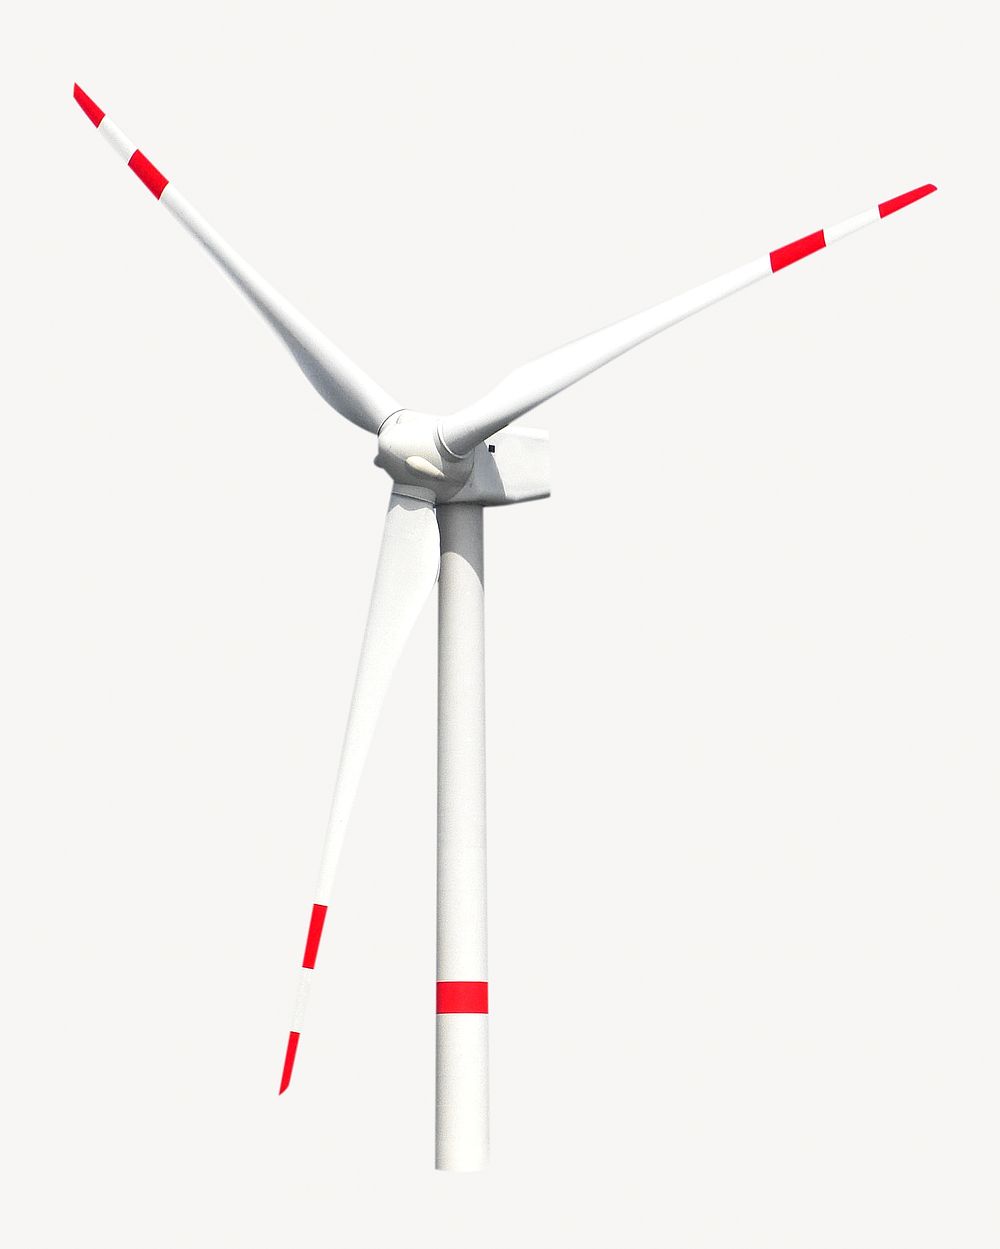 Wind turbine, isolated object